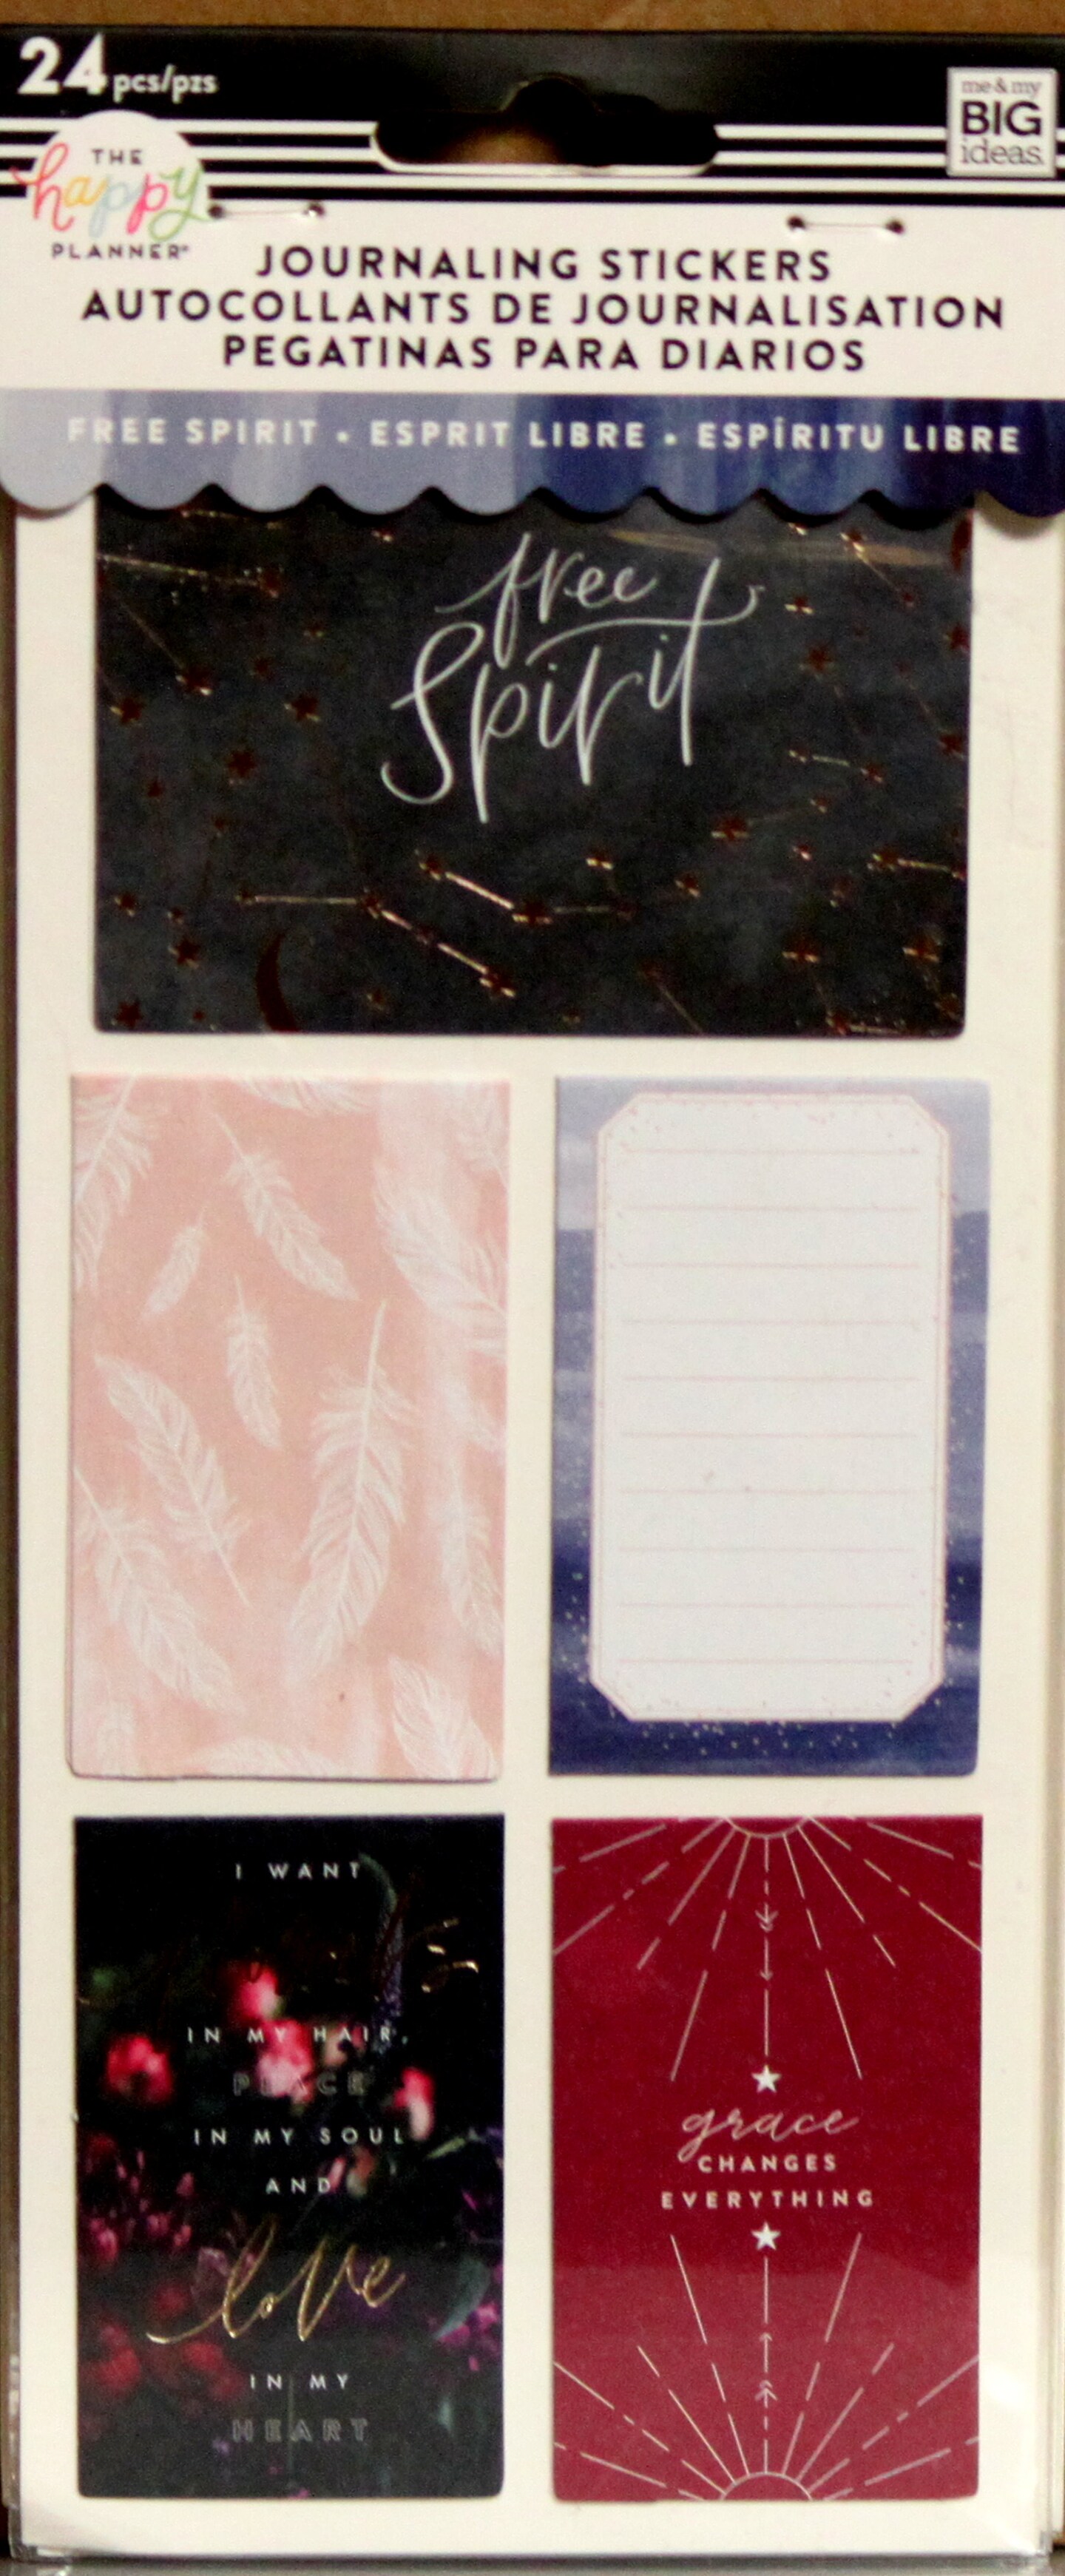 The Happy Planner Free Spirit Journaling Stickers Flip Book